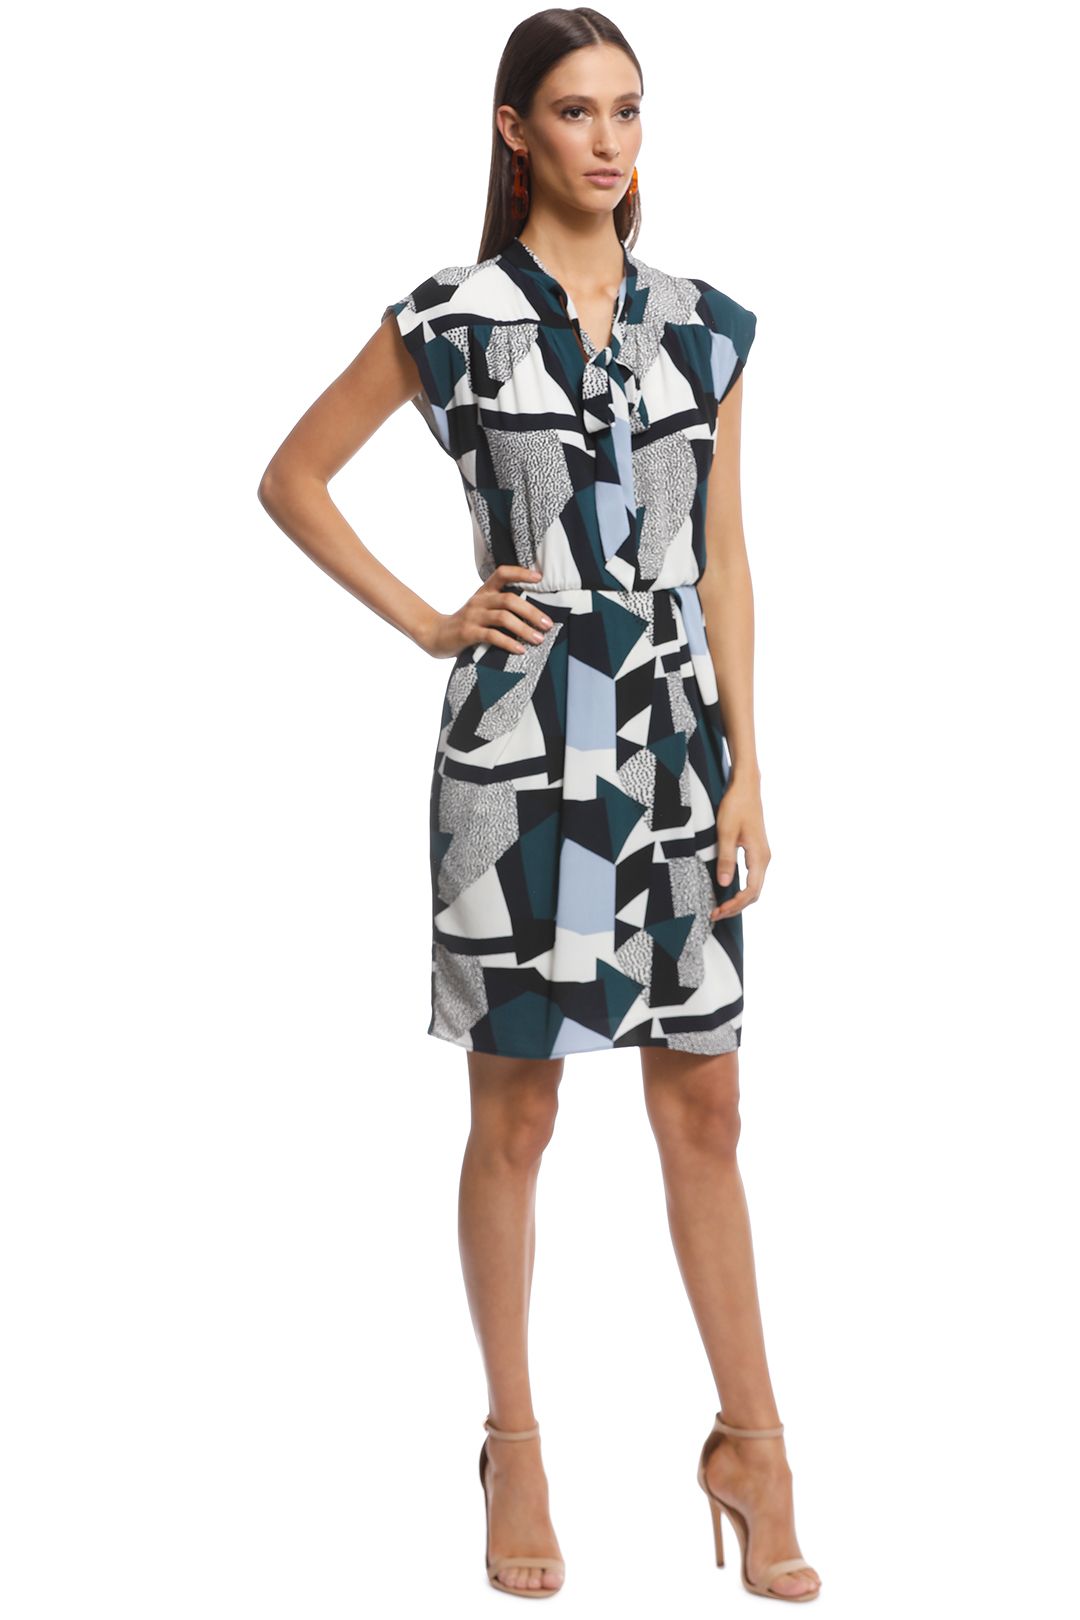 Cue - Textured Geo Spot Dress - Multi - Side